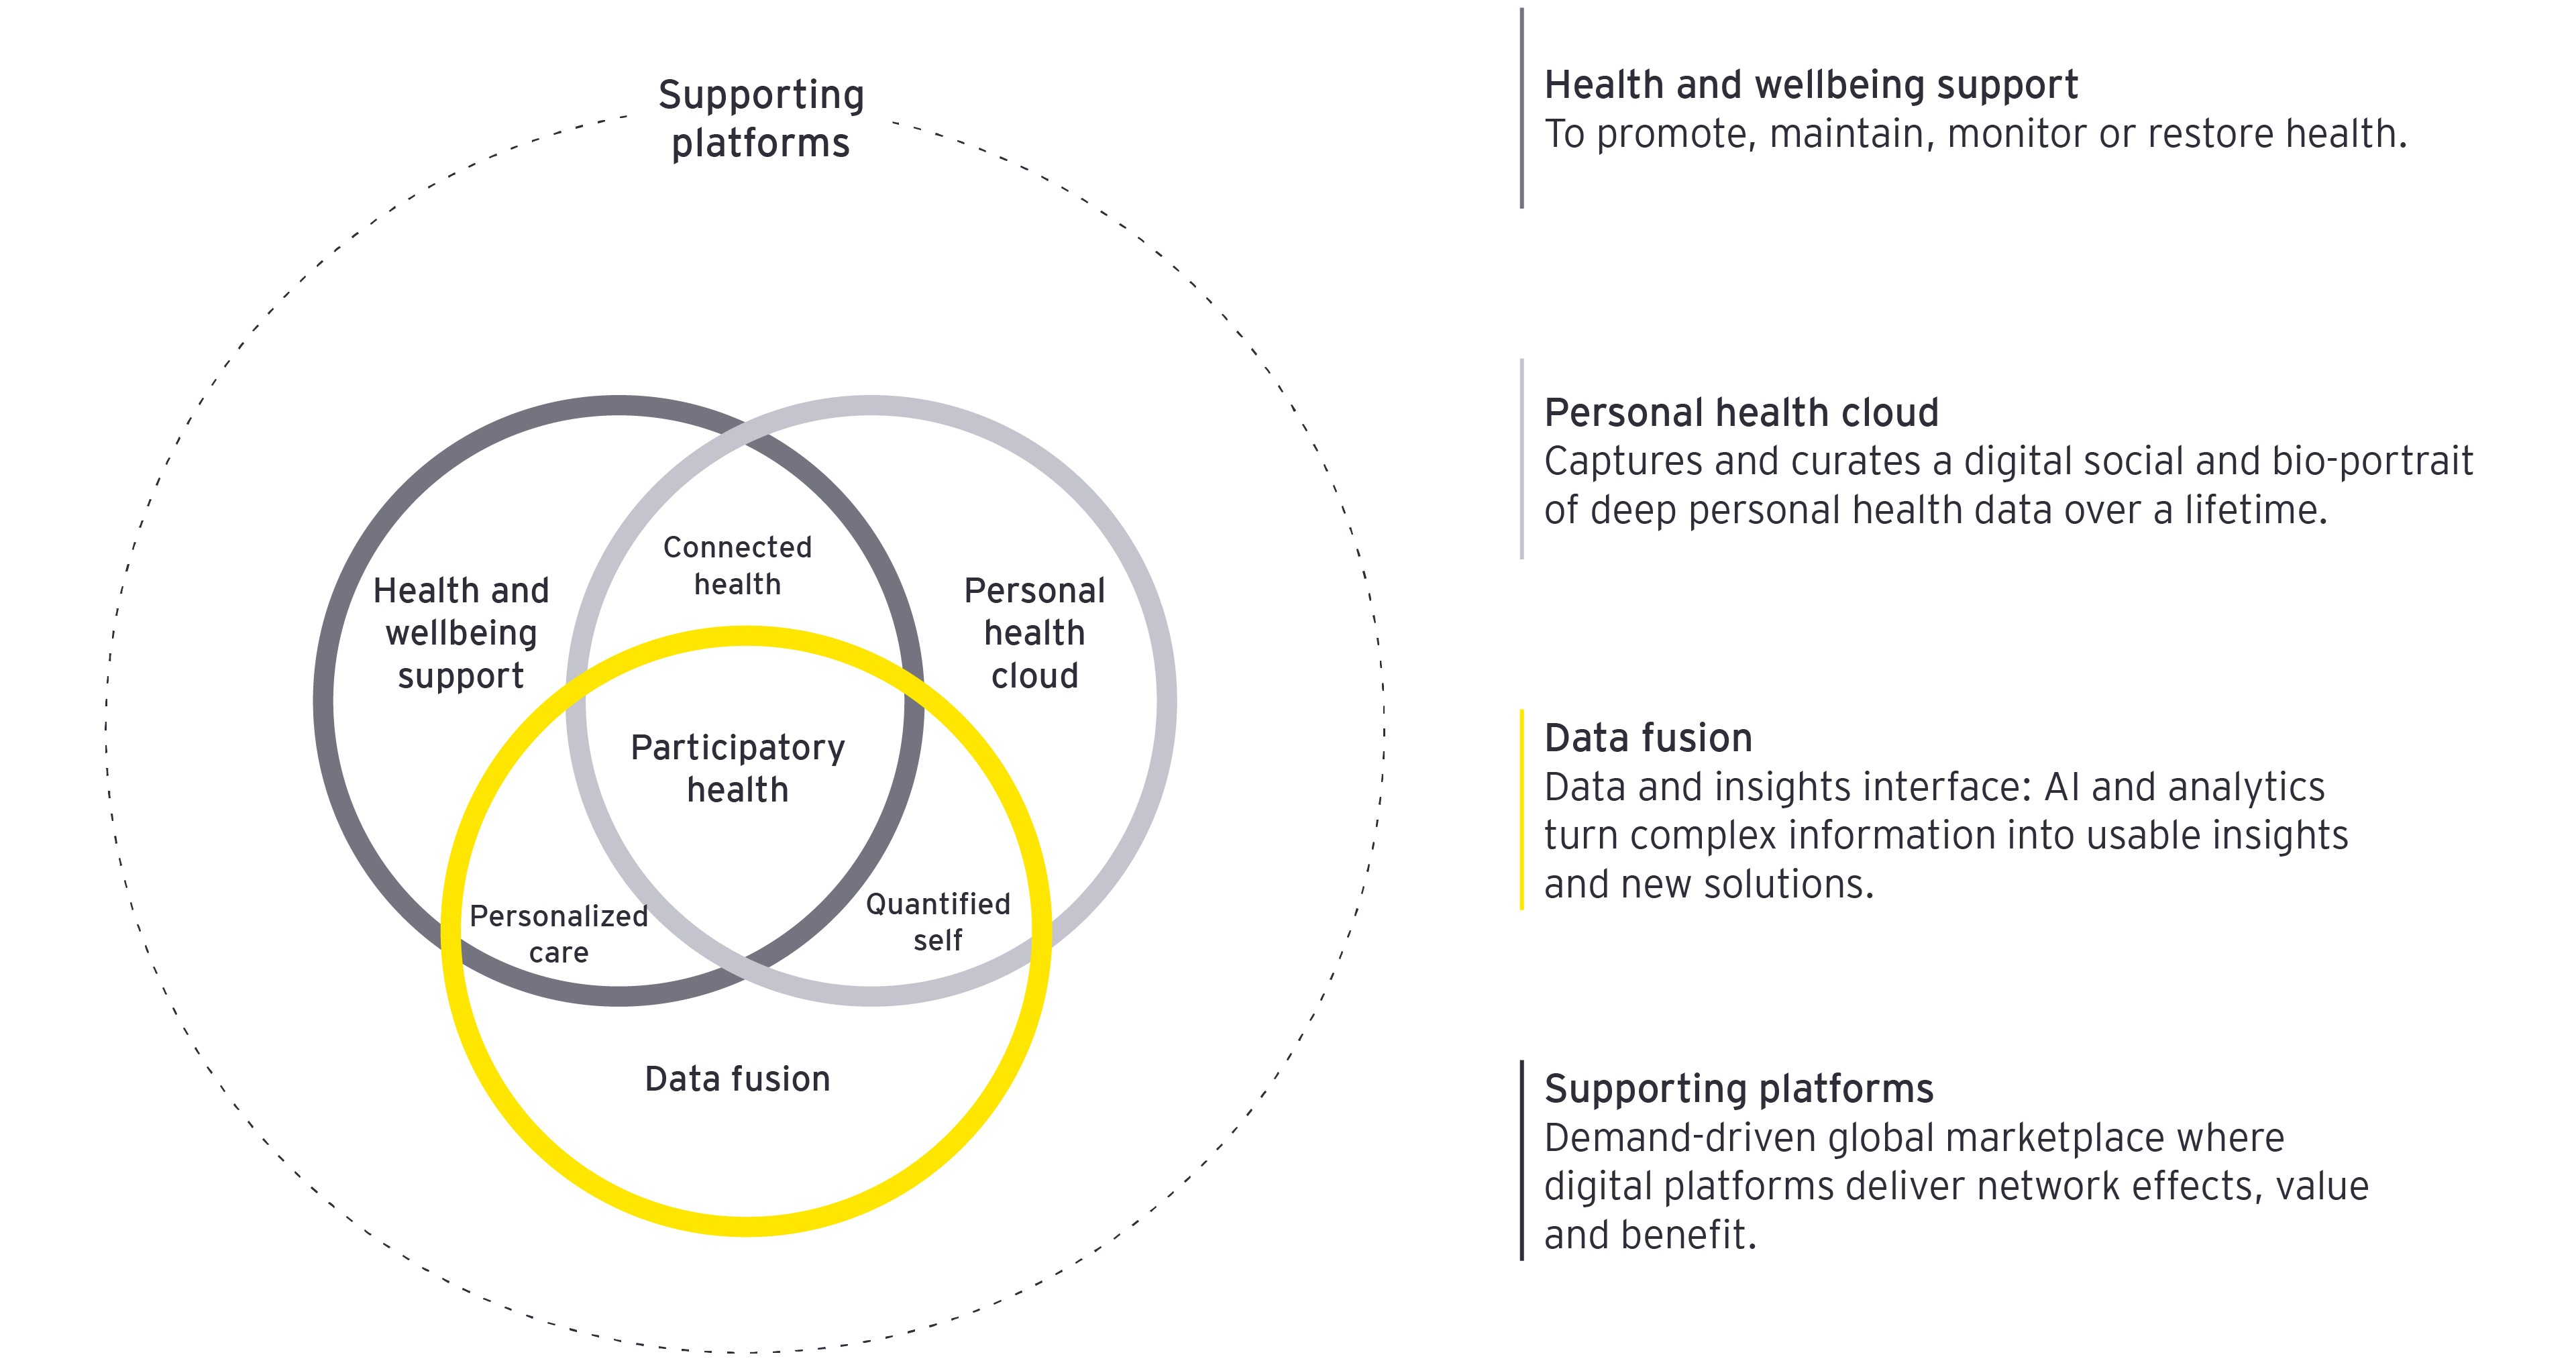 Participatory health paradigm infographic